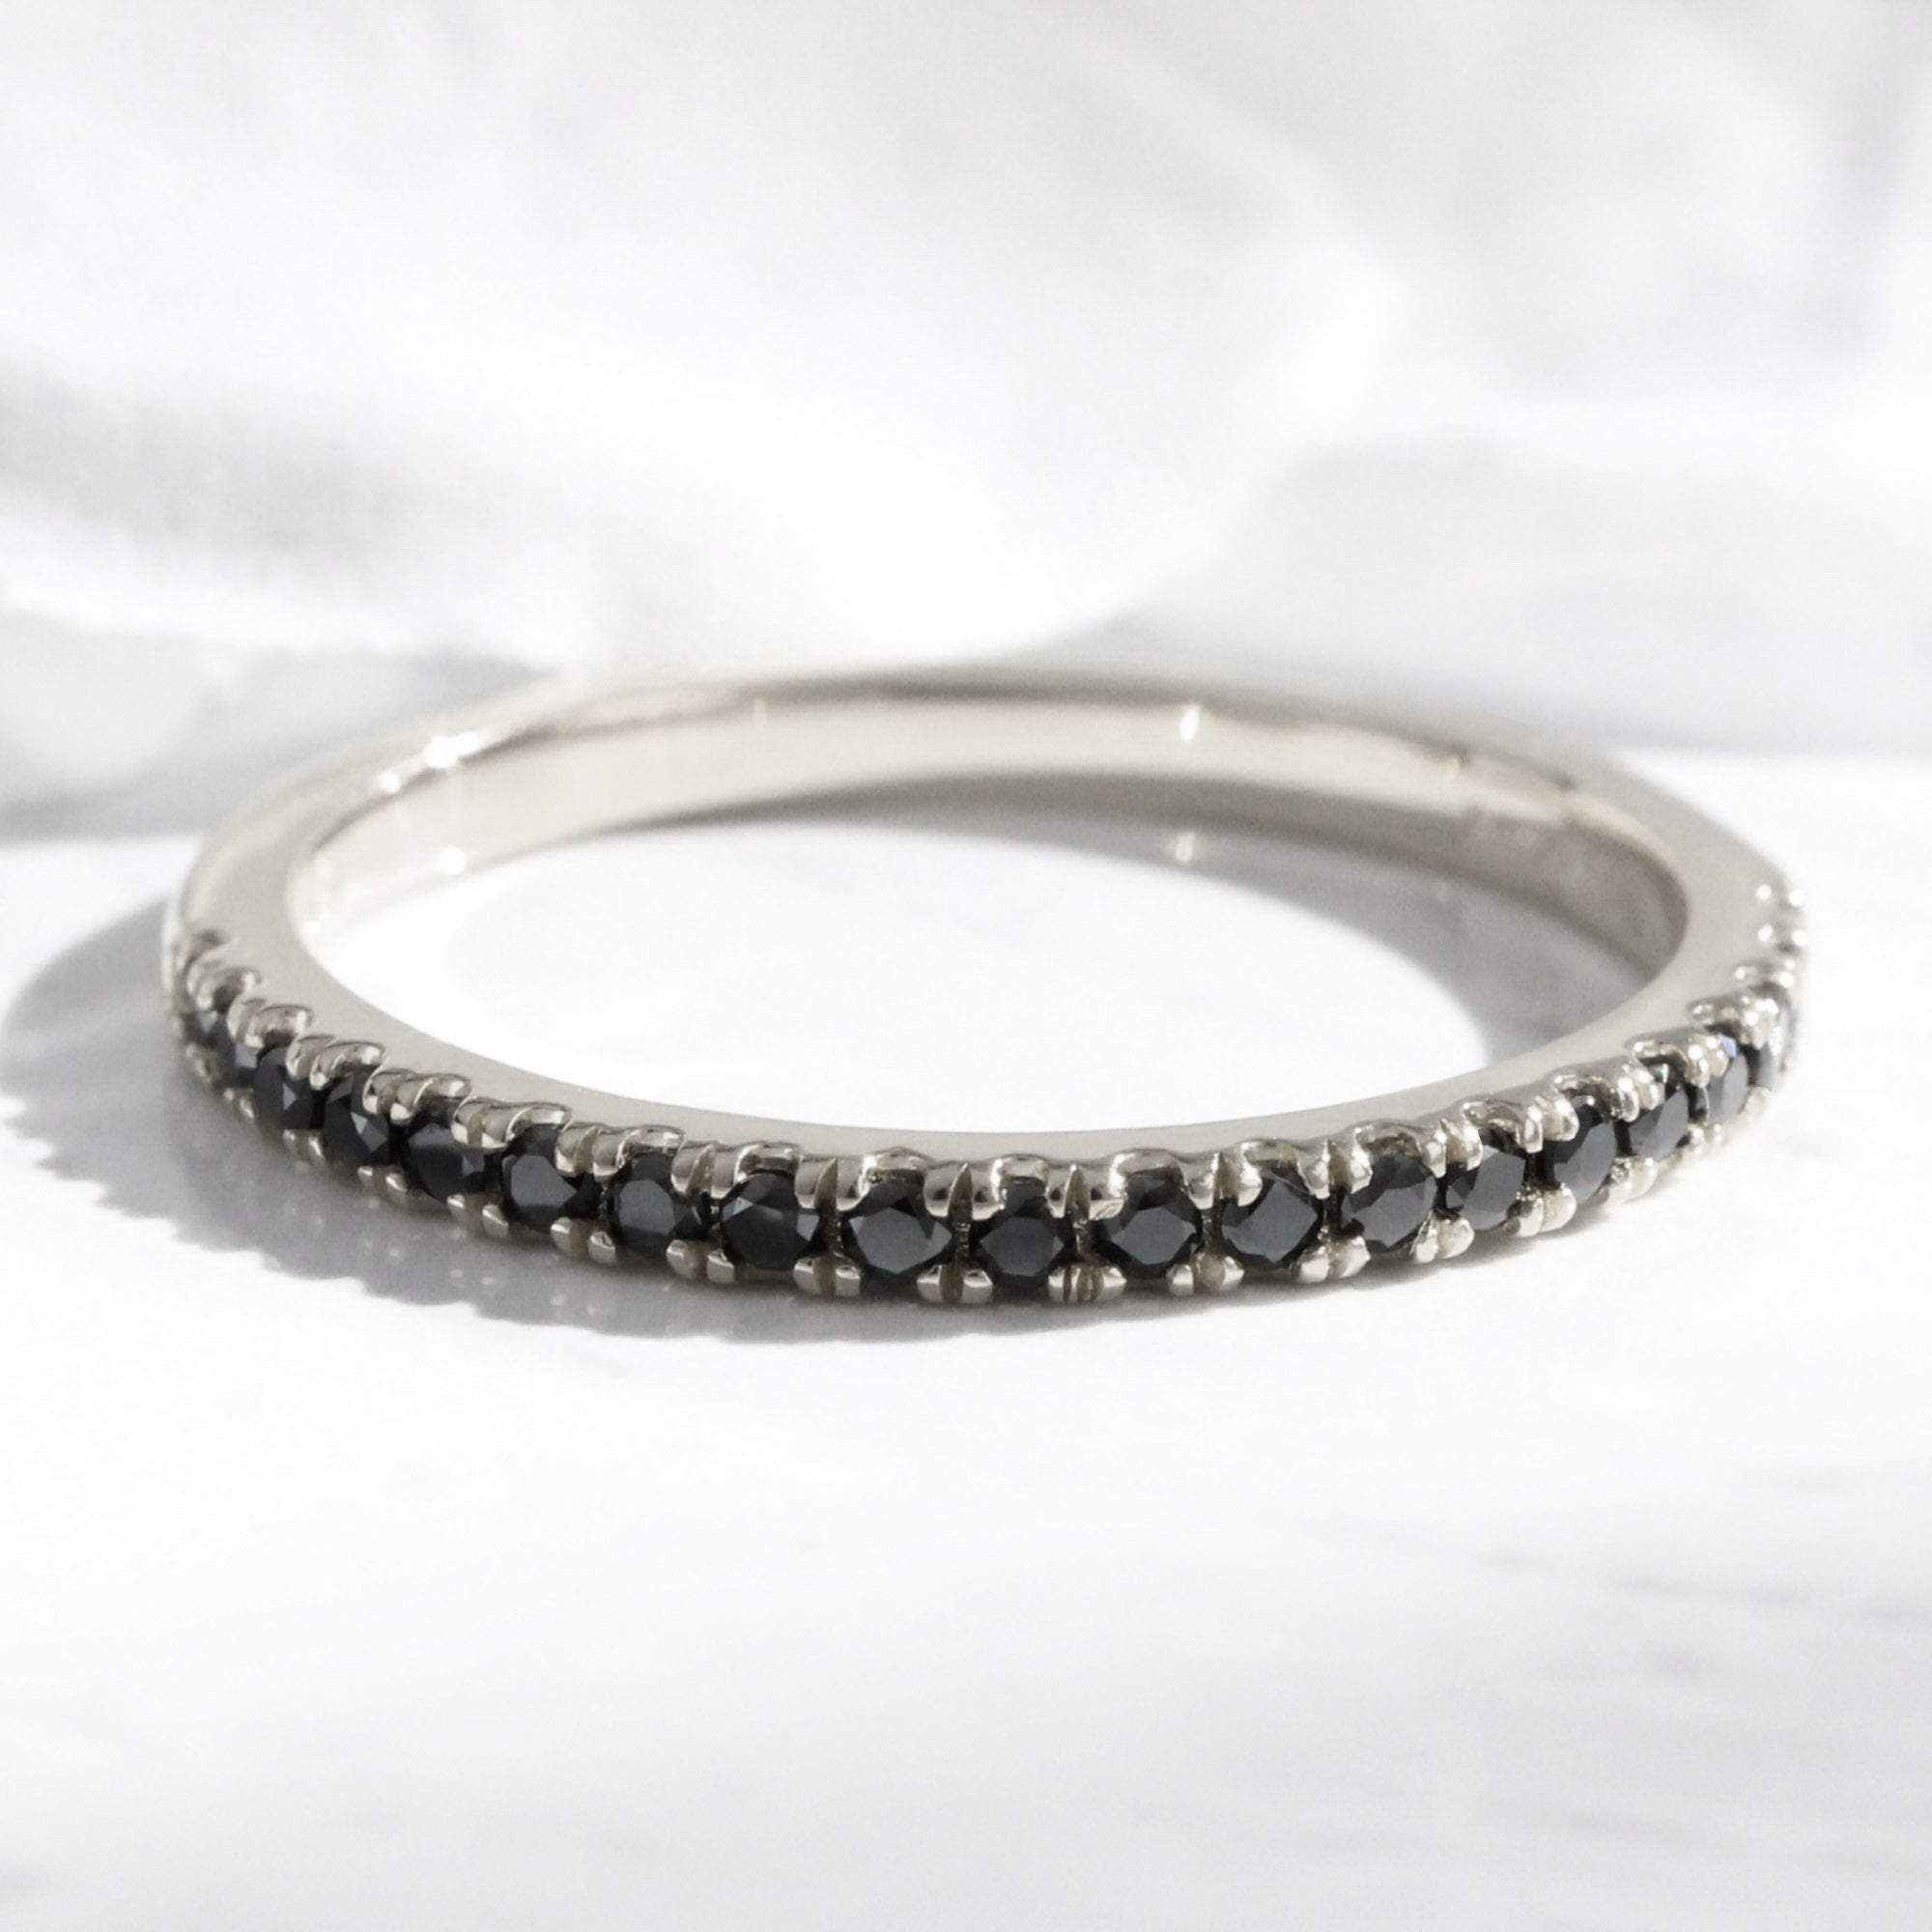 Pave black diamond wedding ring white gold half eternity wedding band la more design jewelry